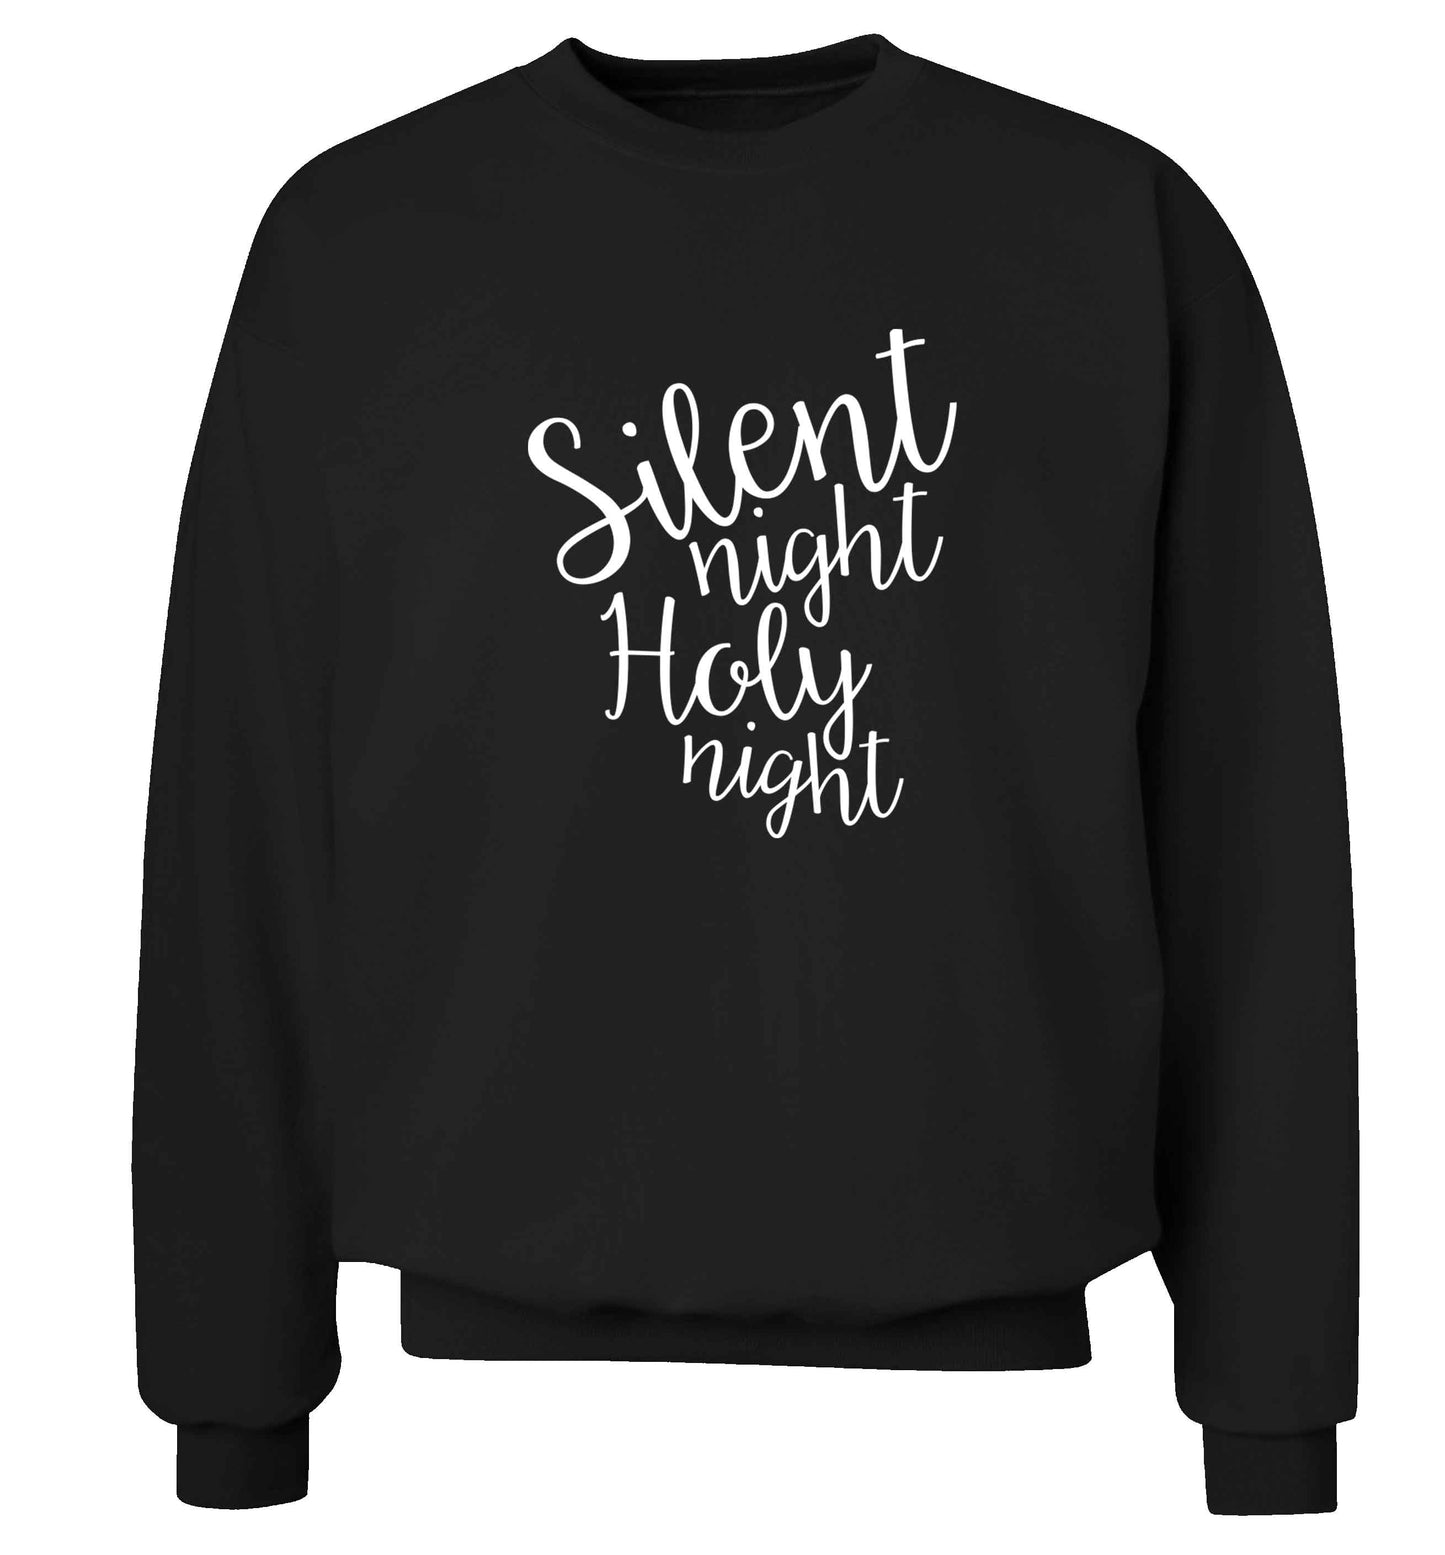 Silent night holy night adult's unisex black sweater 2XL